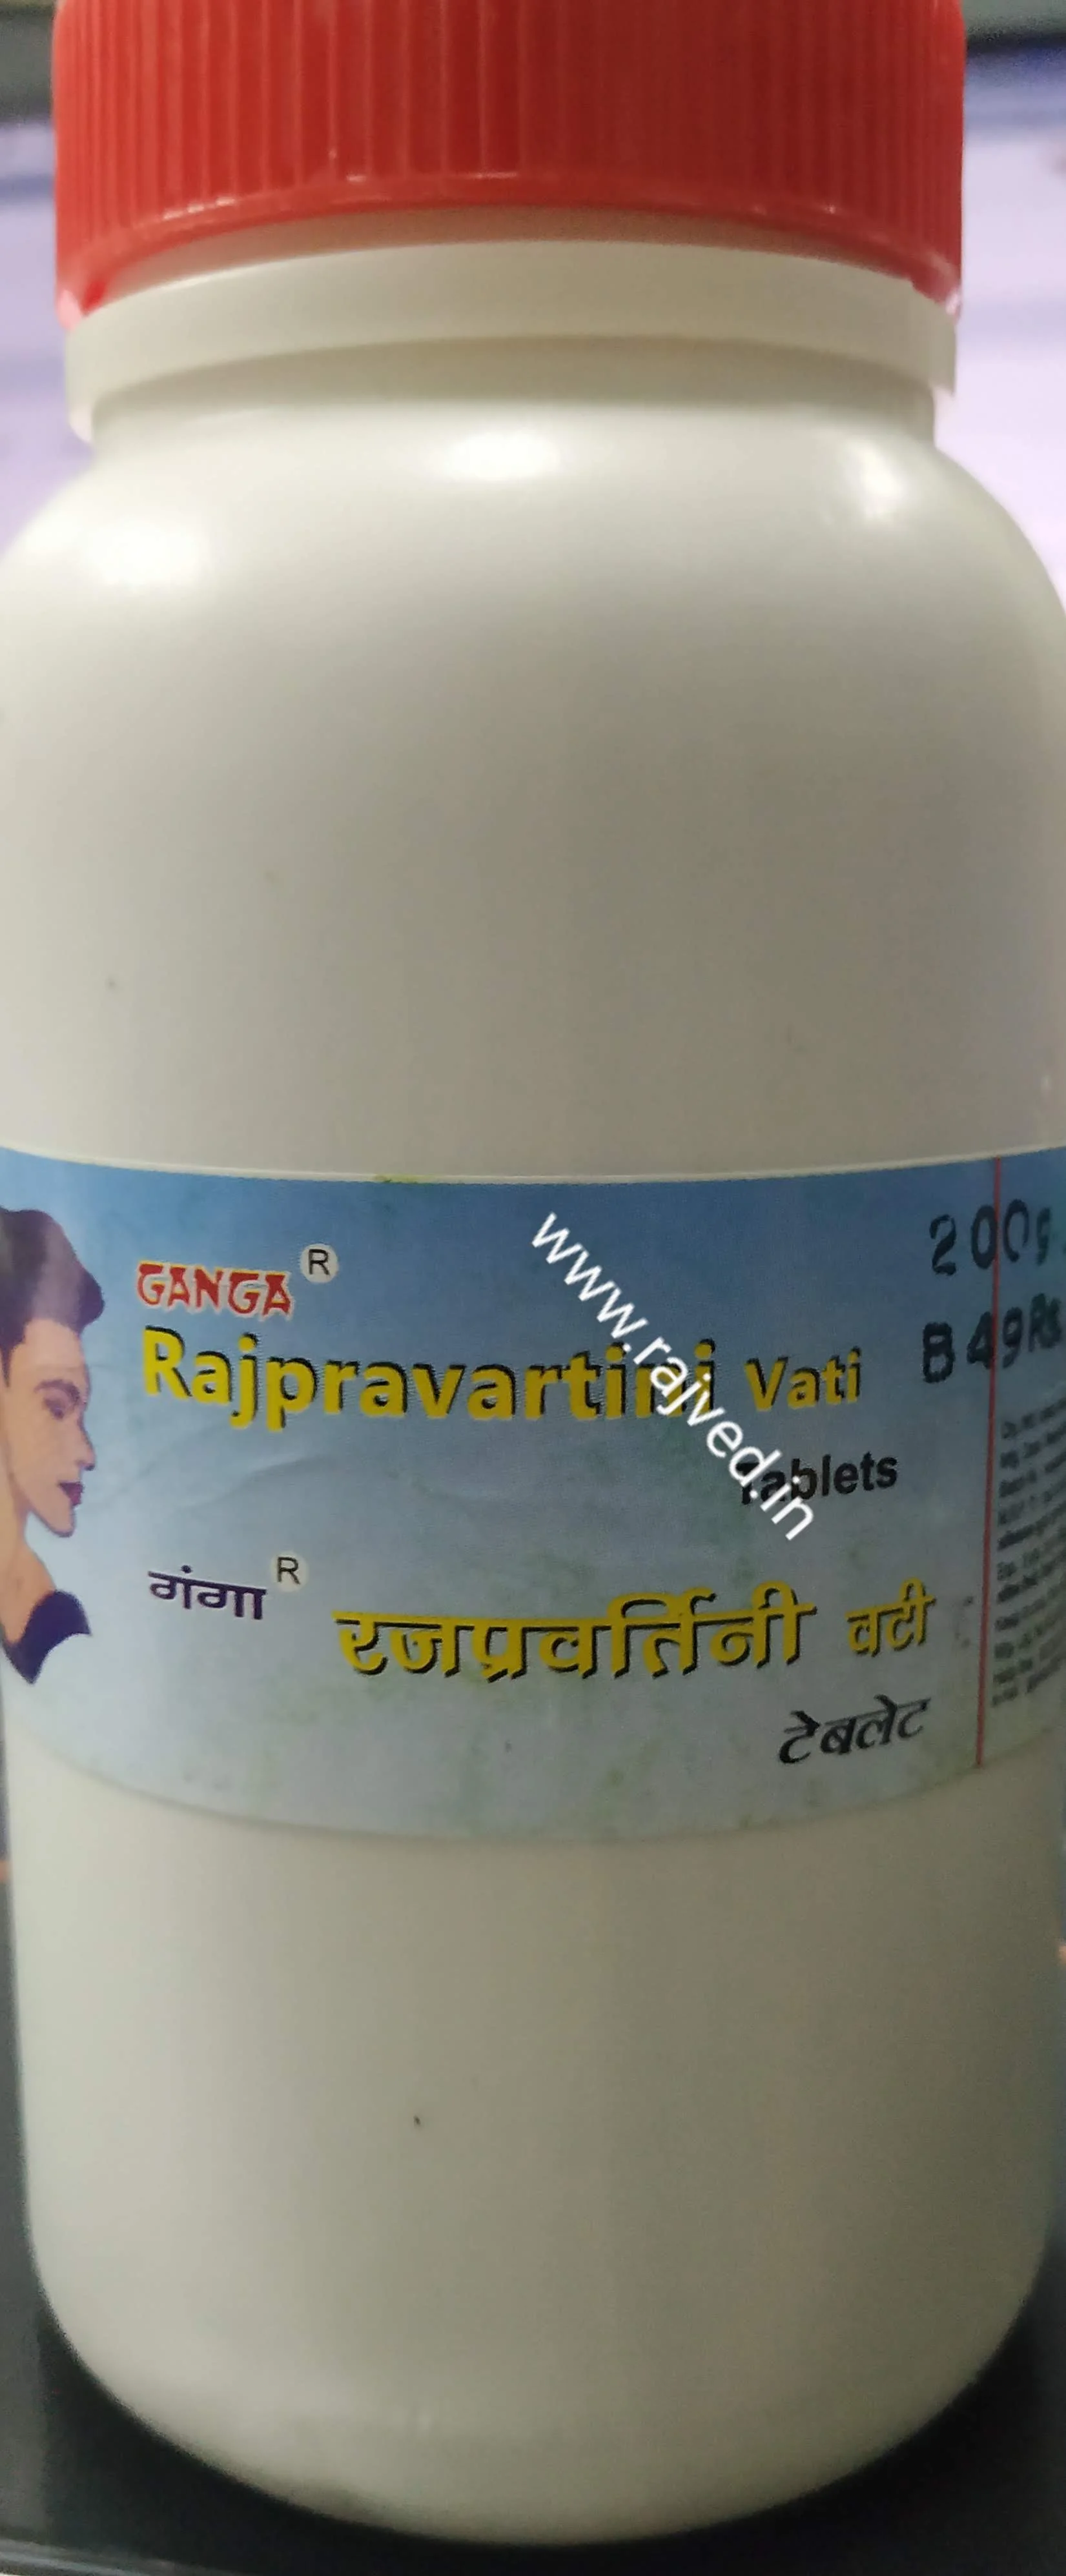 rajapravartani vati 500 gm upto 20% off free shipping Ganga Pharmaceuticals